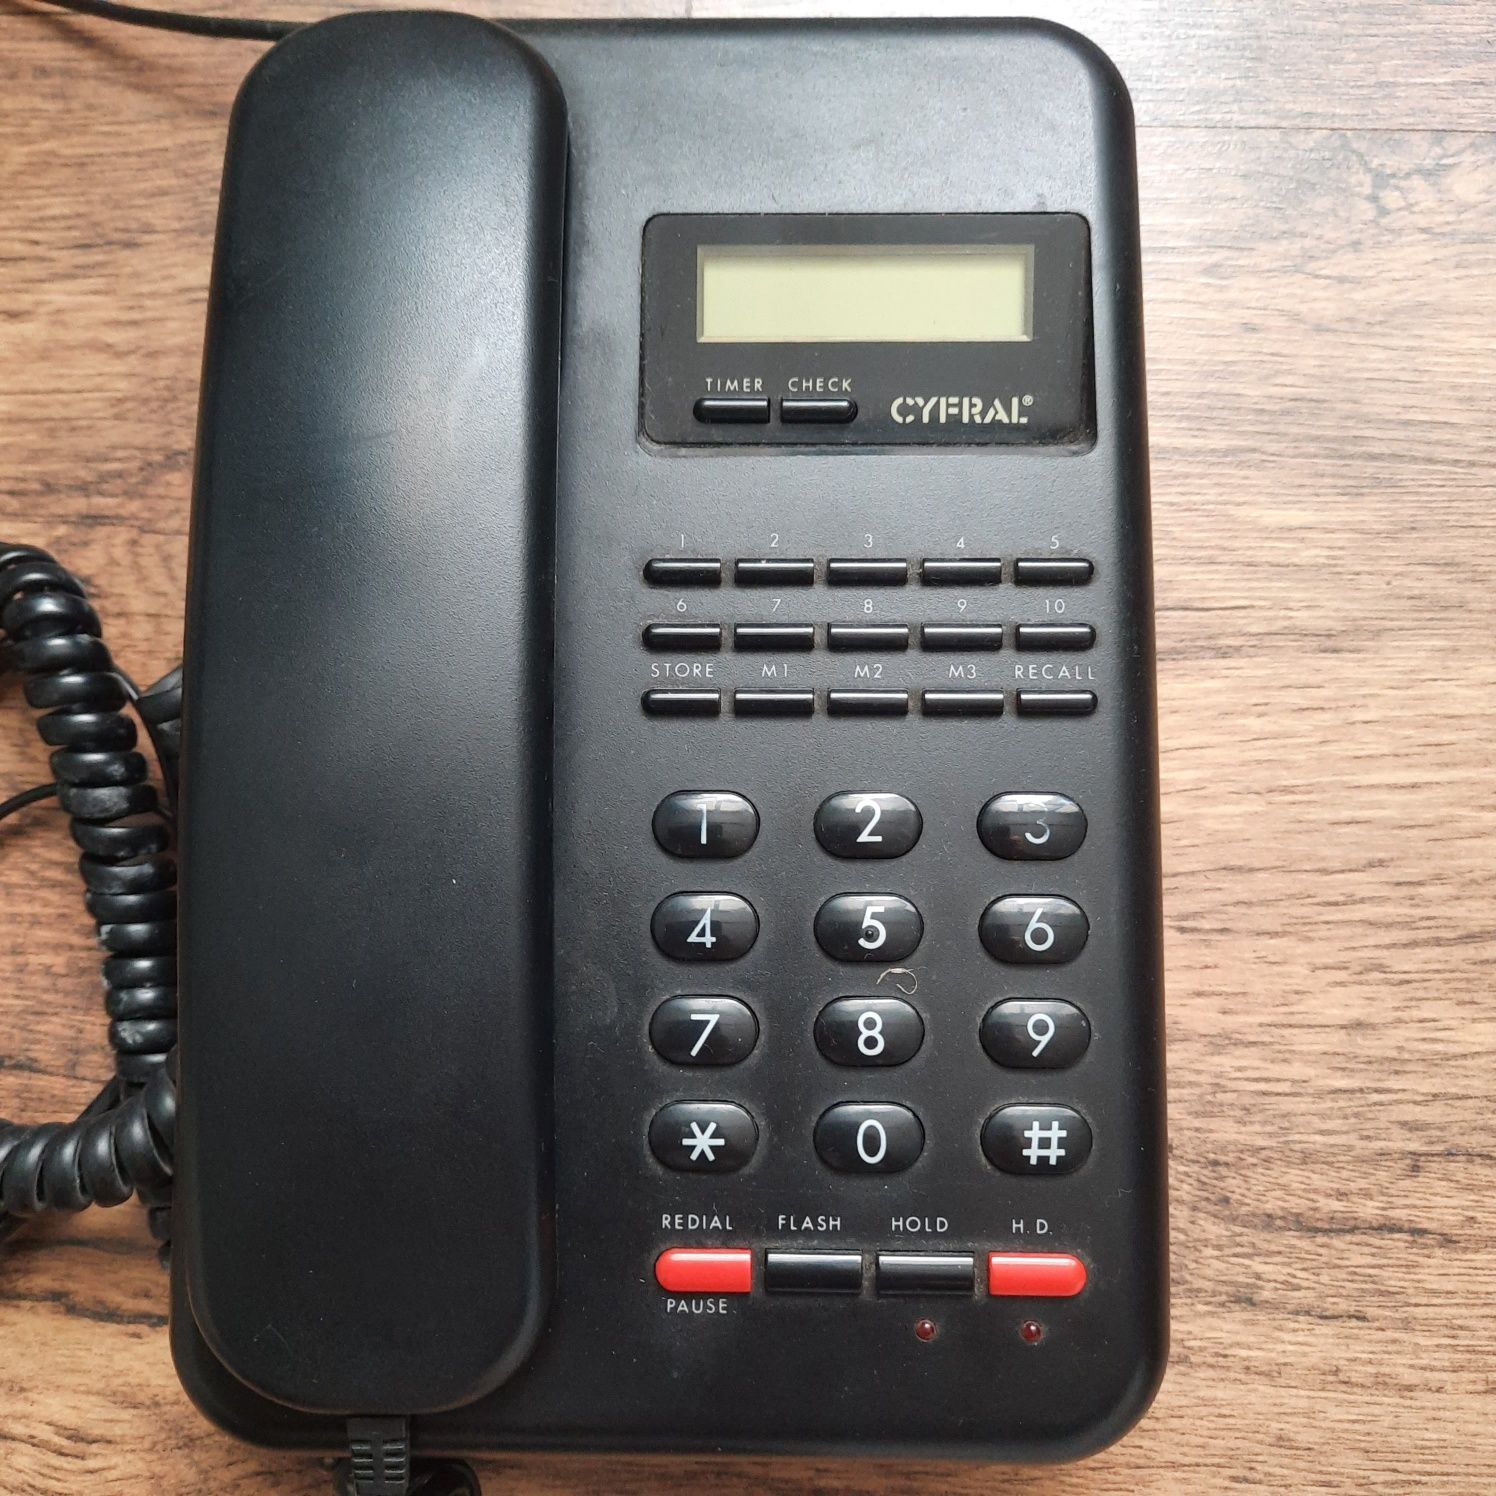 Telefon stacjonarny model C-928 bardzo dobry